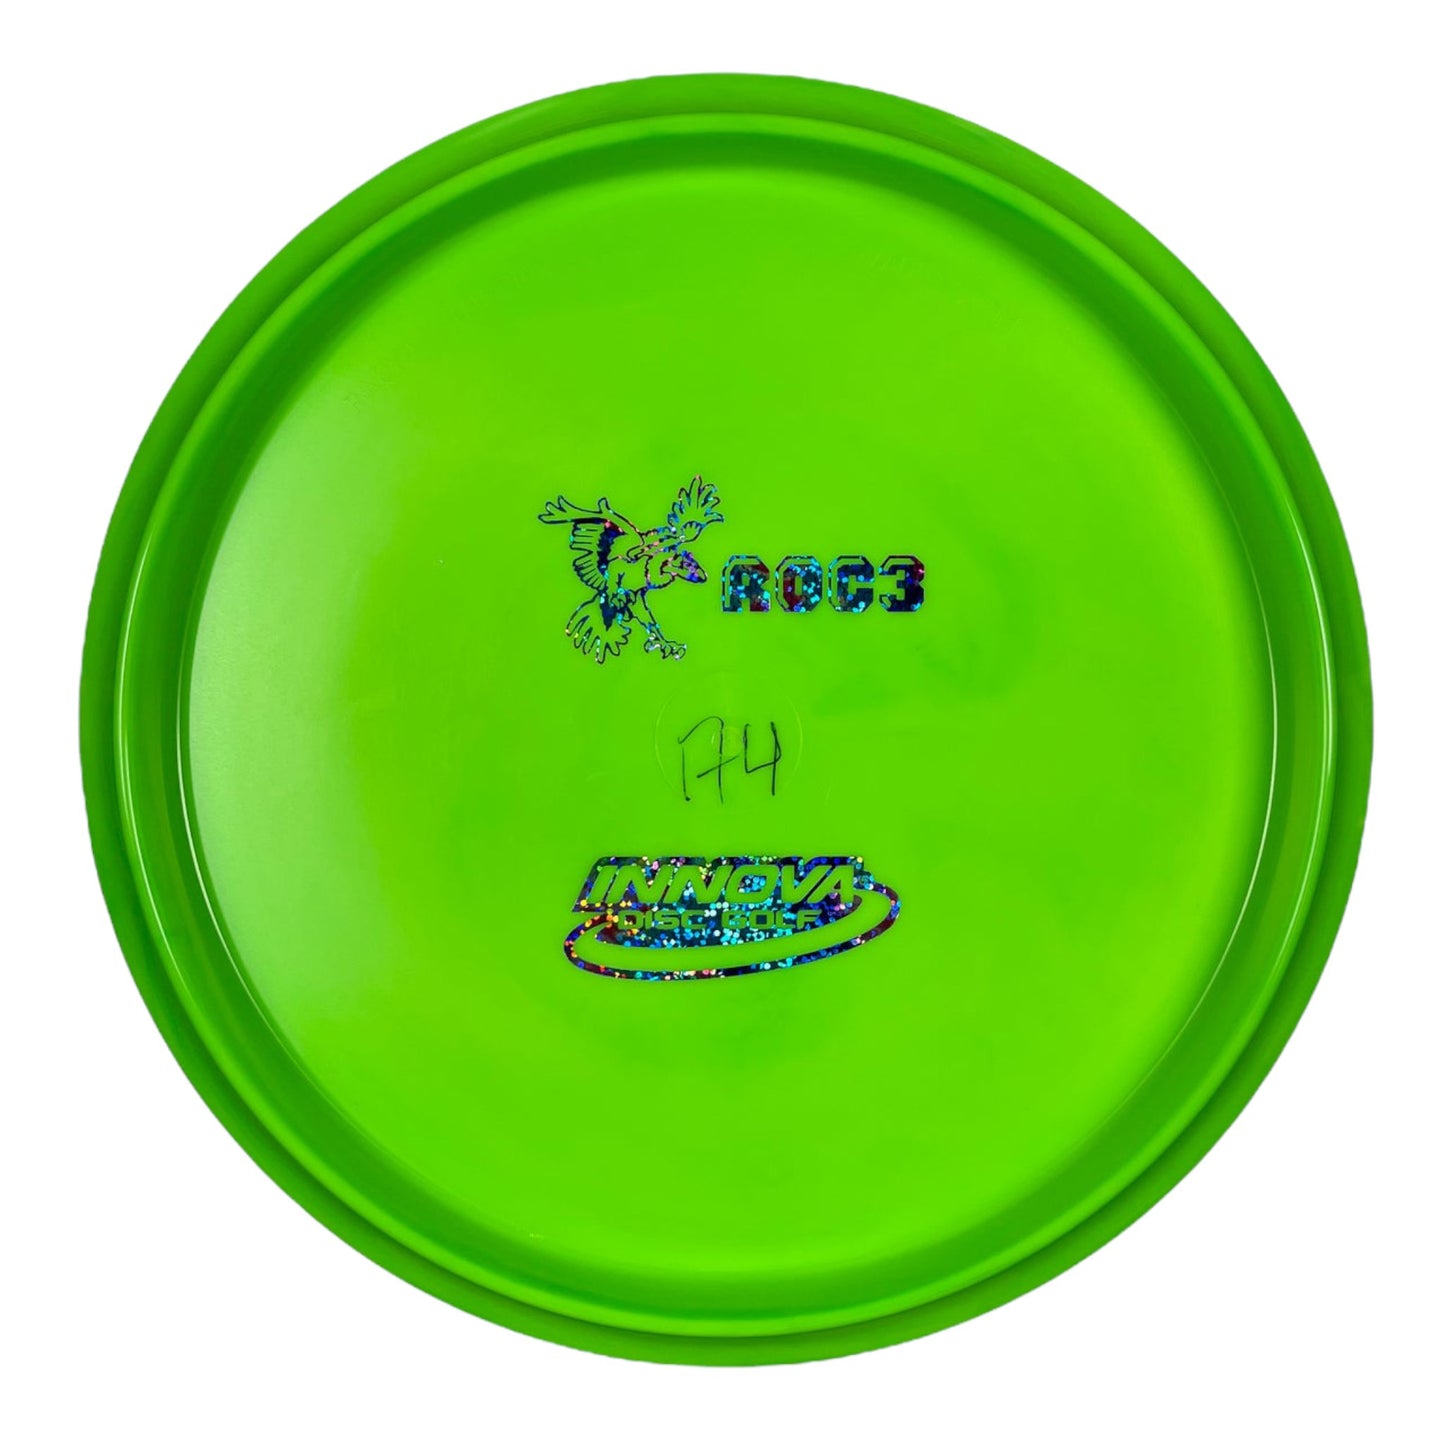 Innova Champion Discs Roc3 | Star | Green/Rainbow 174g (Bottom Stamp) Disc Golf